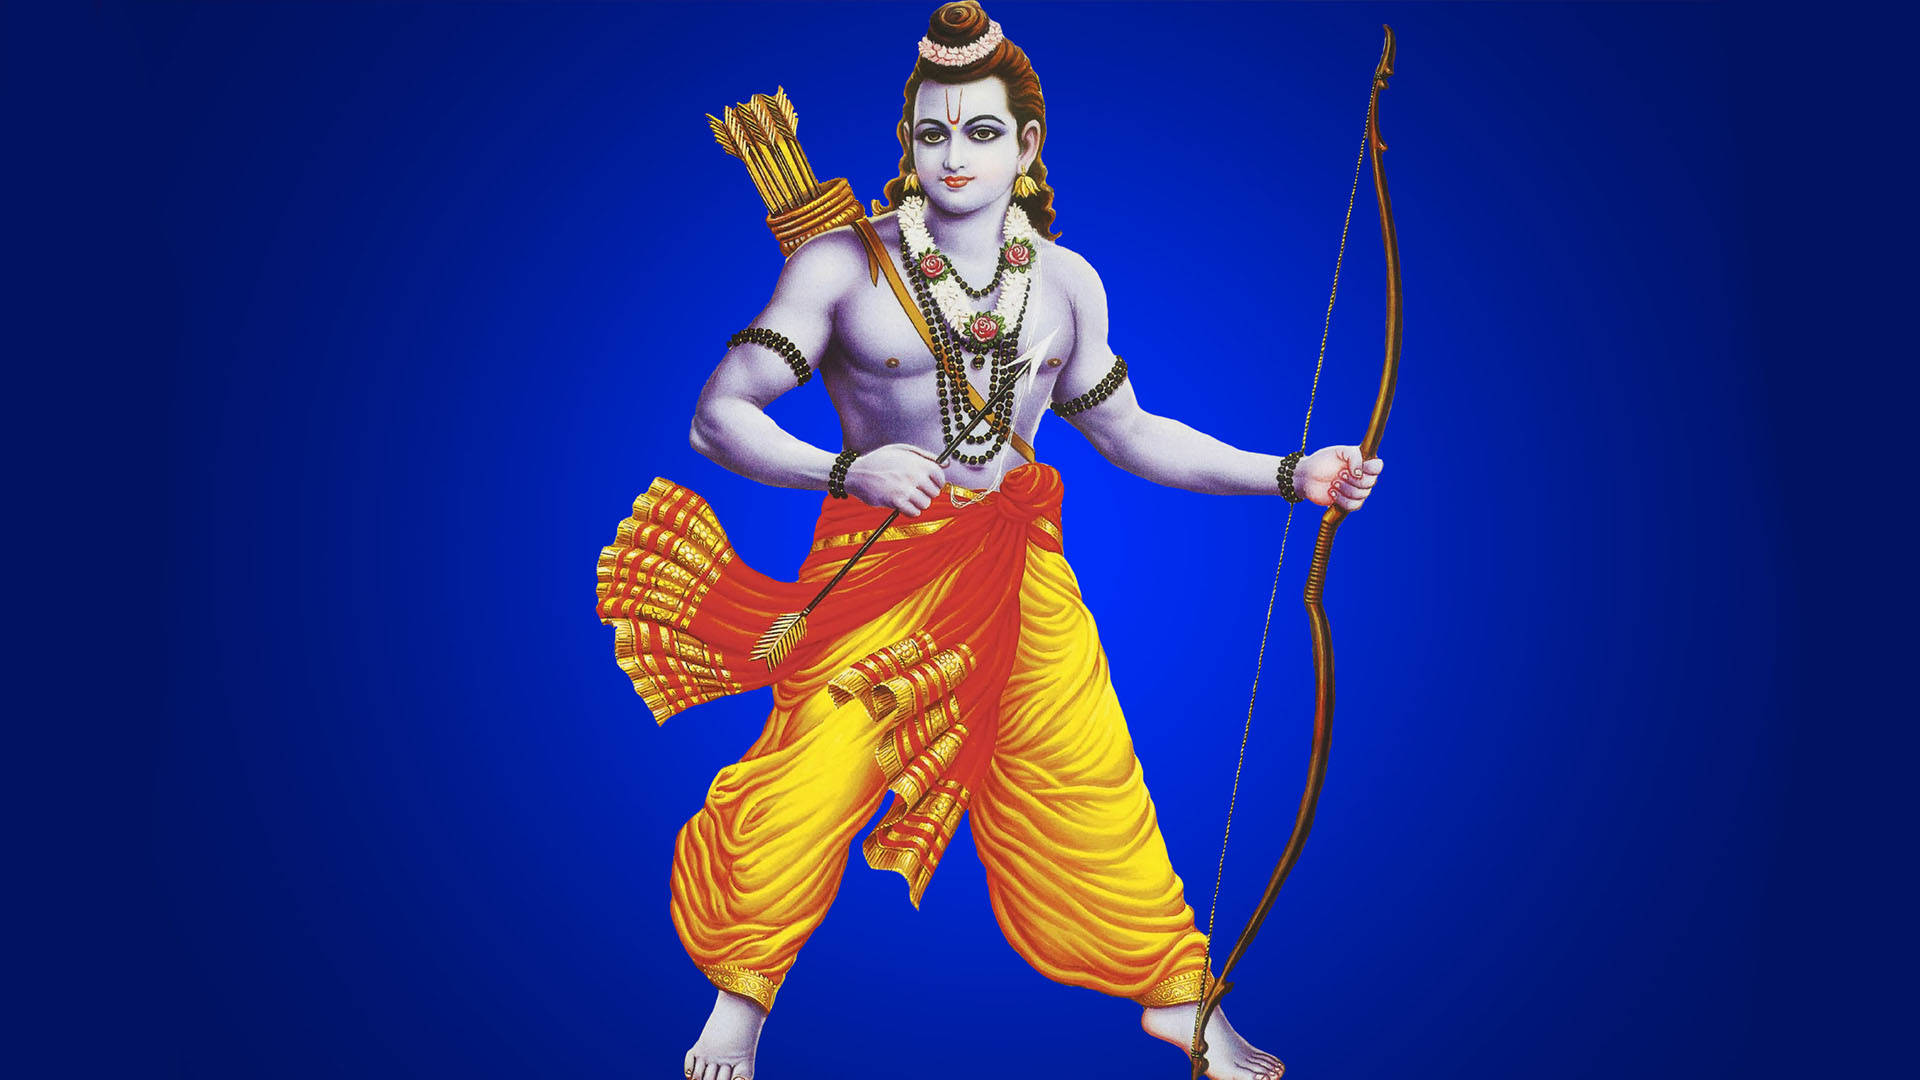 Free Jai Shri Ram Wallpaper Downloads, [100+] Jai Shri Ram Wallpapers for  FREE 